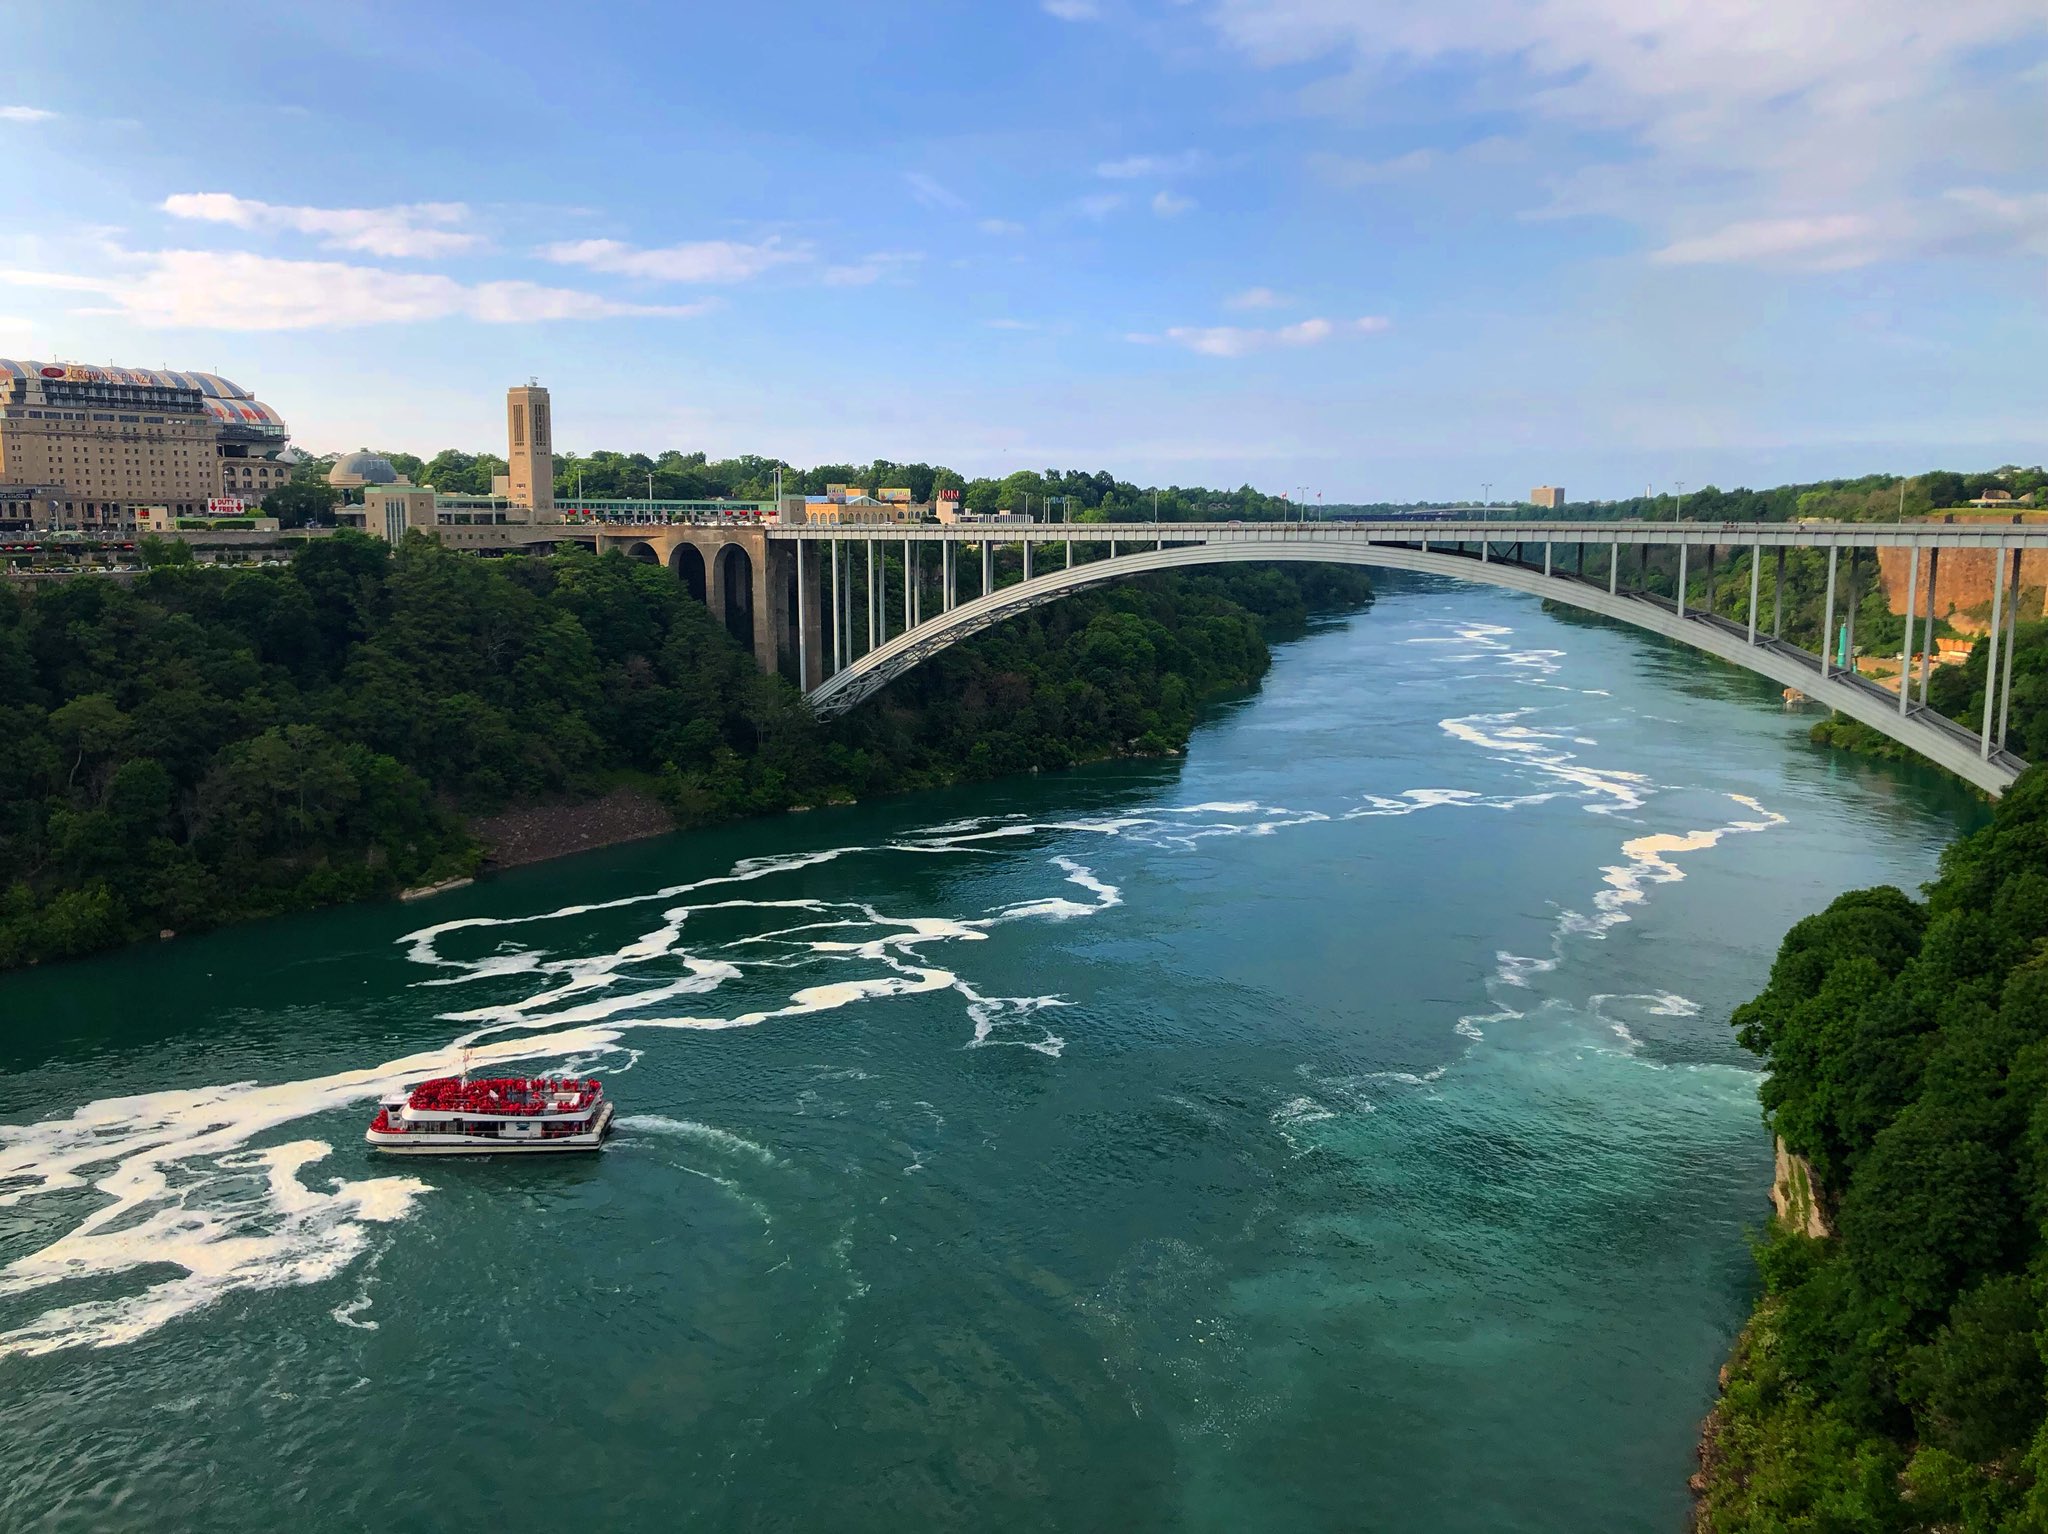 Malek Teffaha 🍎 تفاحة 🇵🇸 on Twitter: "The Rainbow Bridge #Buffalo # RainbowBridge #Canada #USA #niagarafallscanada #Niagara #border #bridge #maidofthemist https://t.co/oLk1V8KPw5" / Twitter